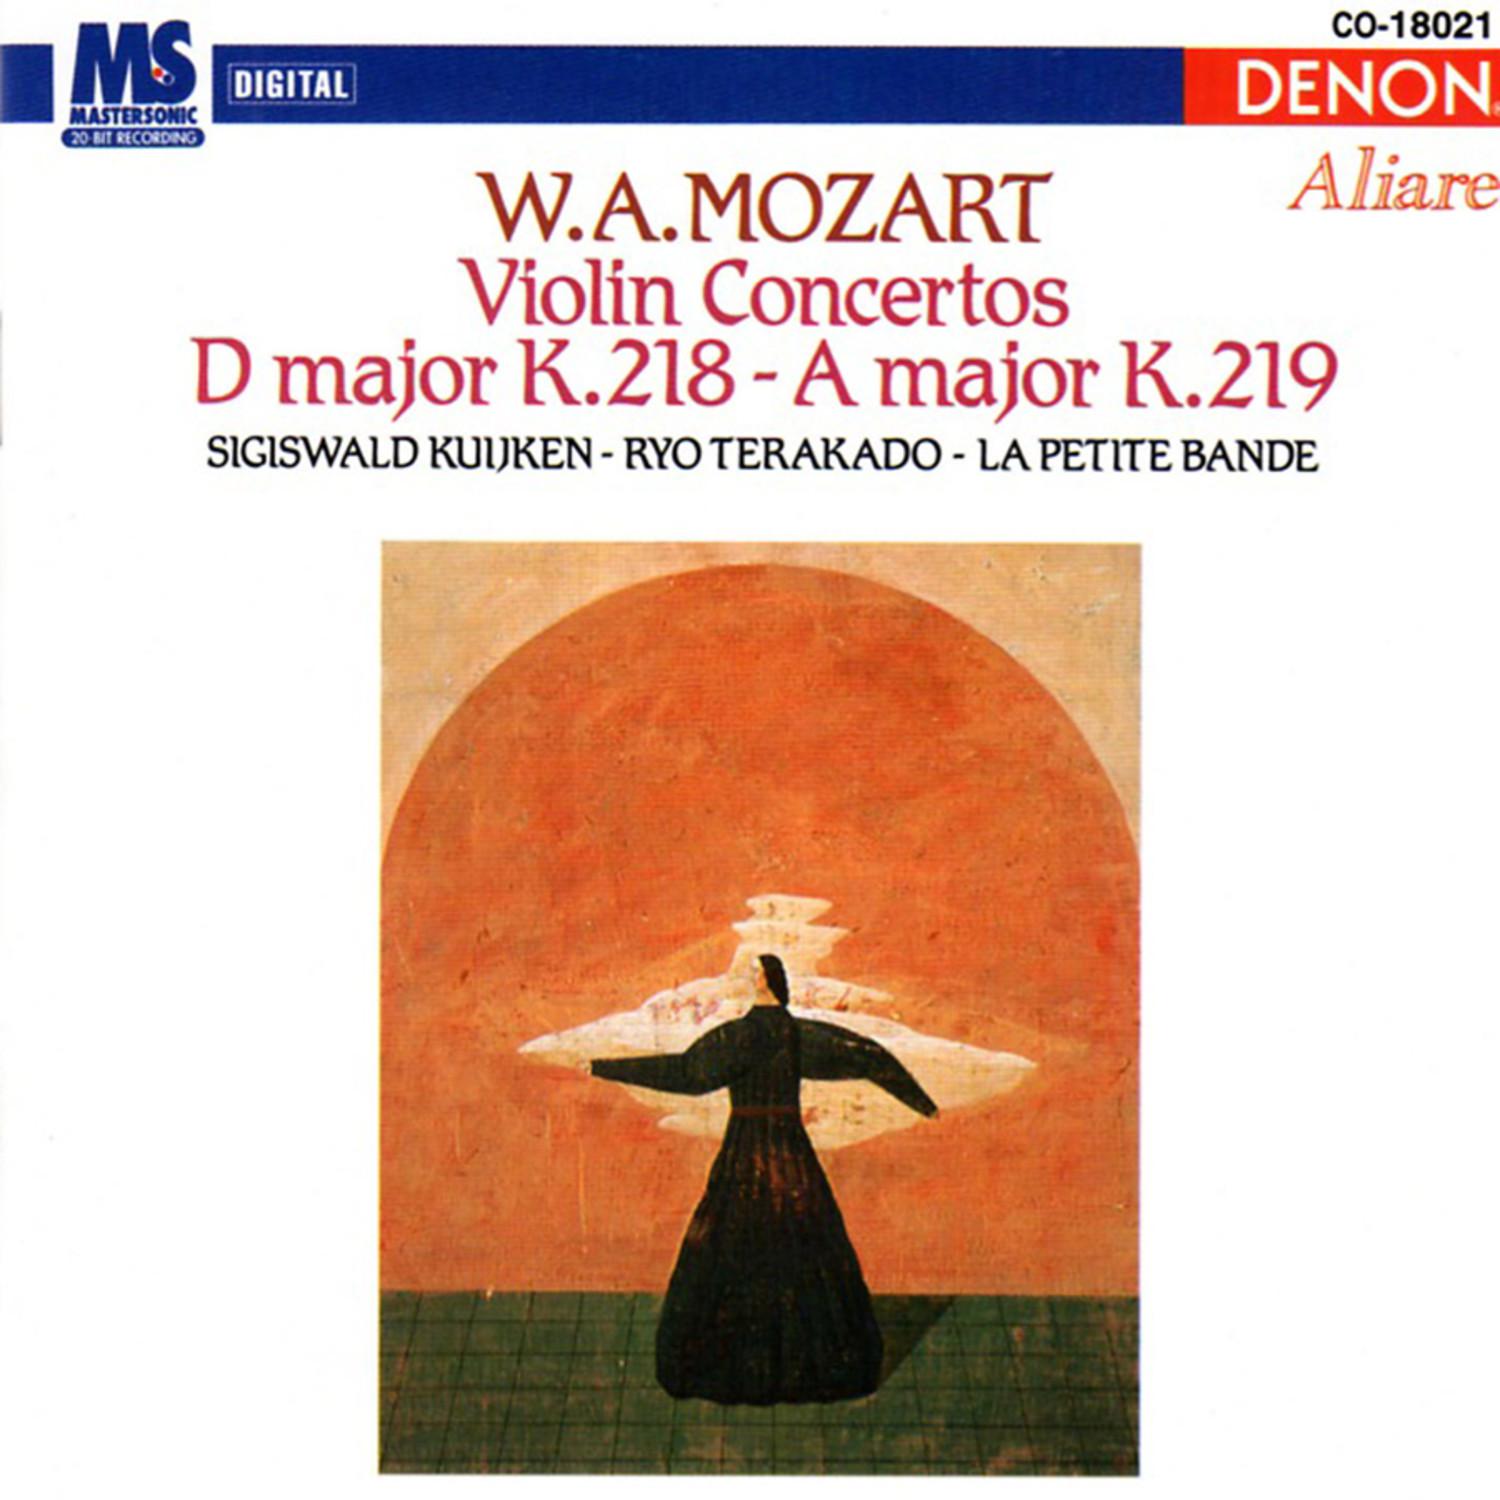 Concerto for Violin & Orchestra in D Major, K.218: I. Allegro